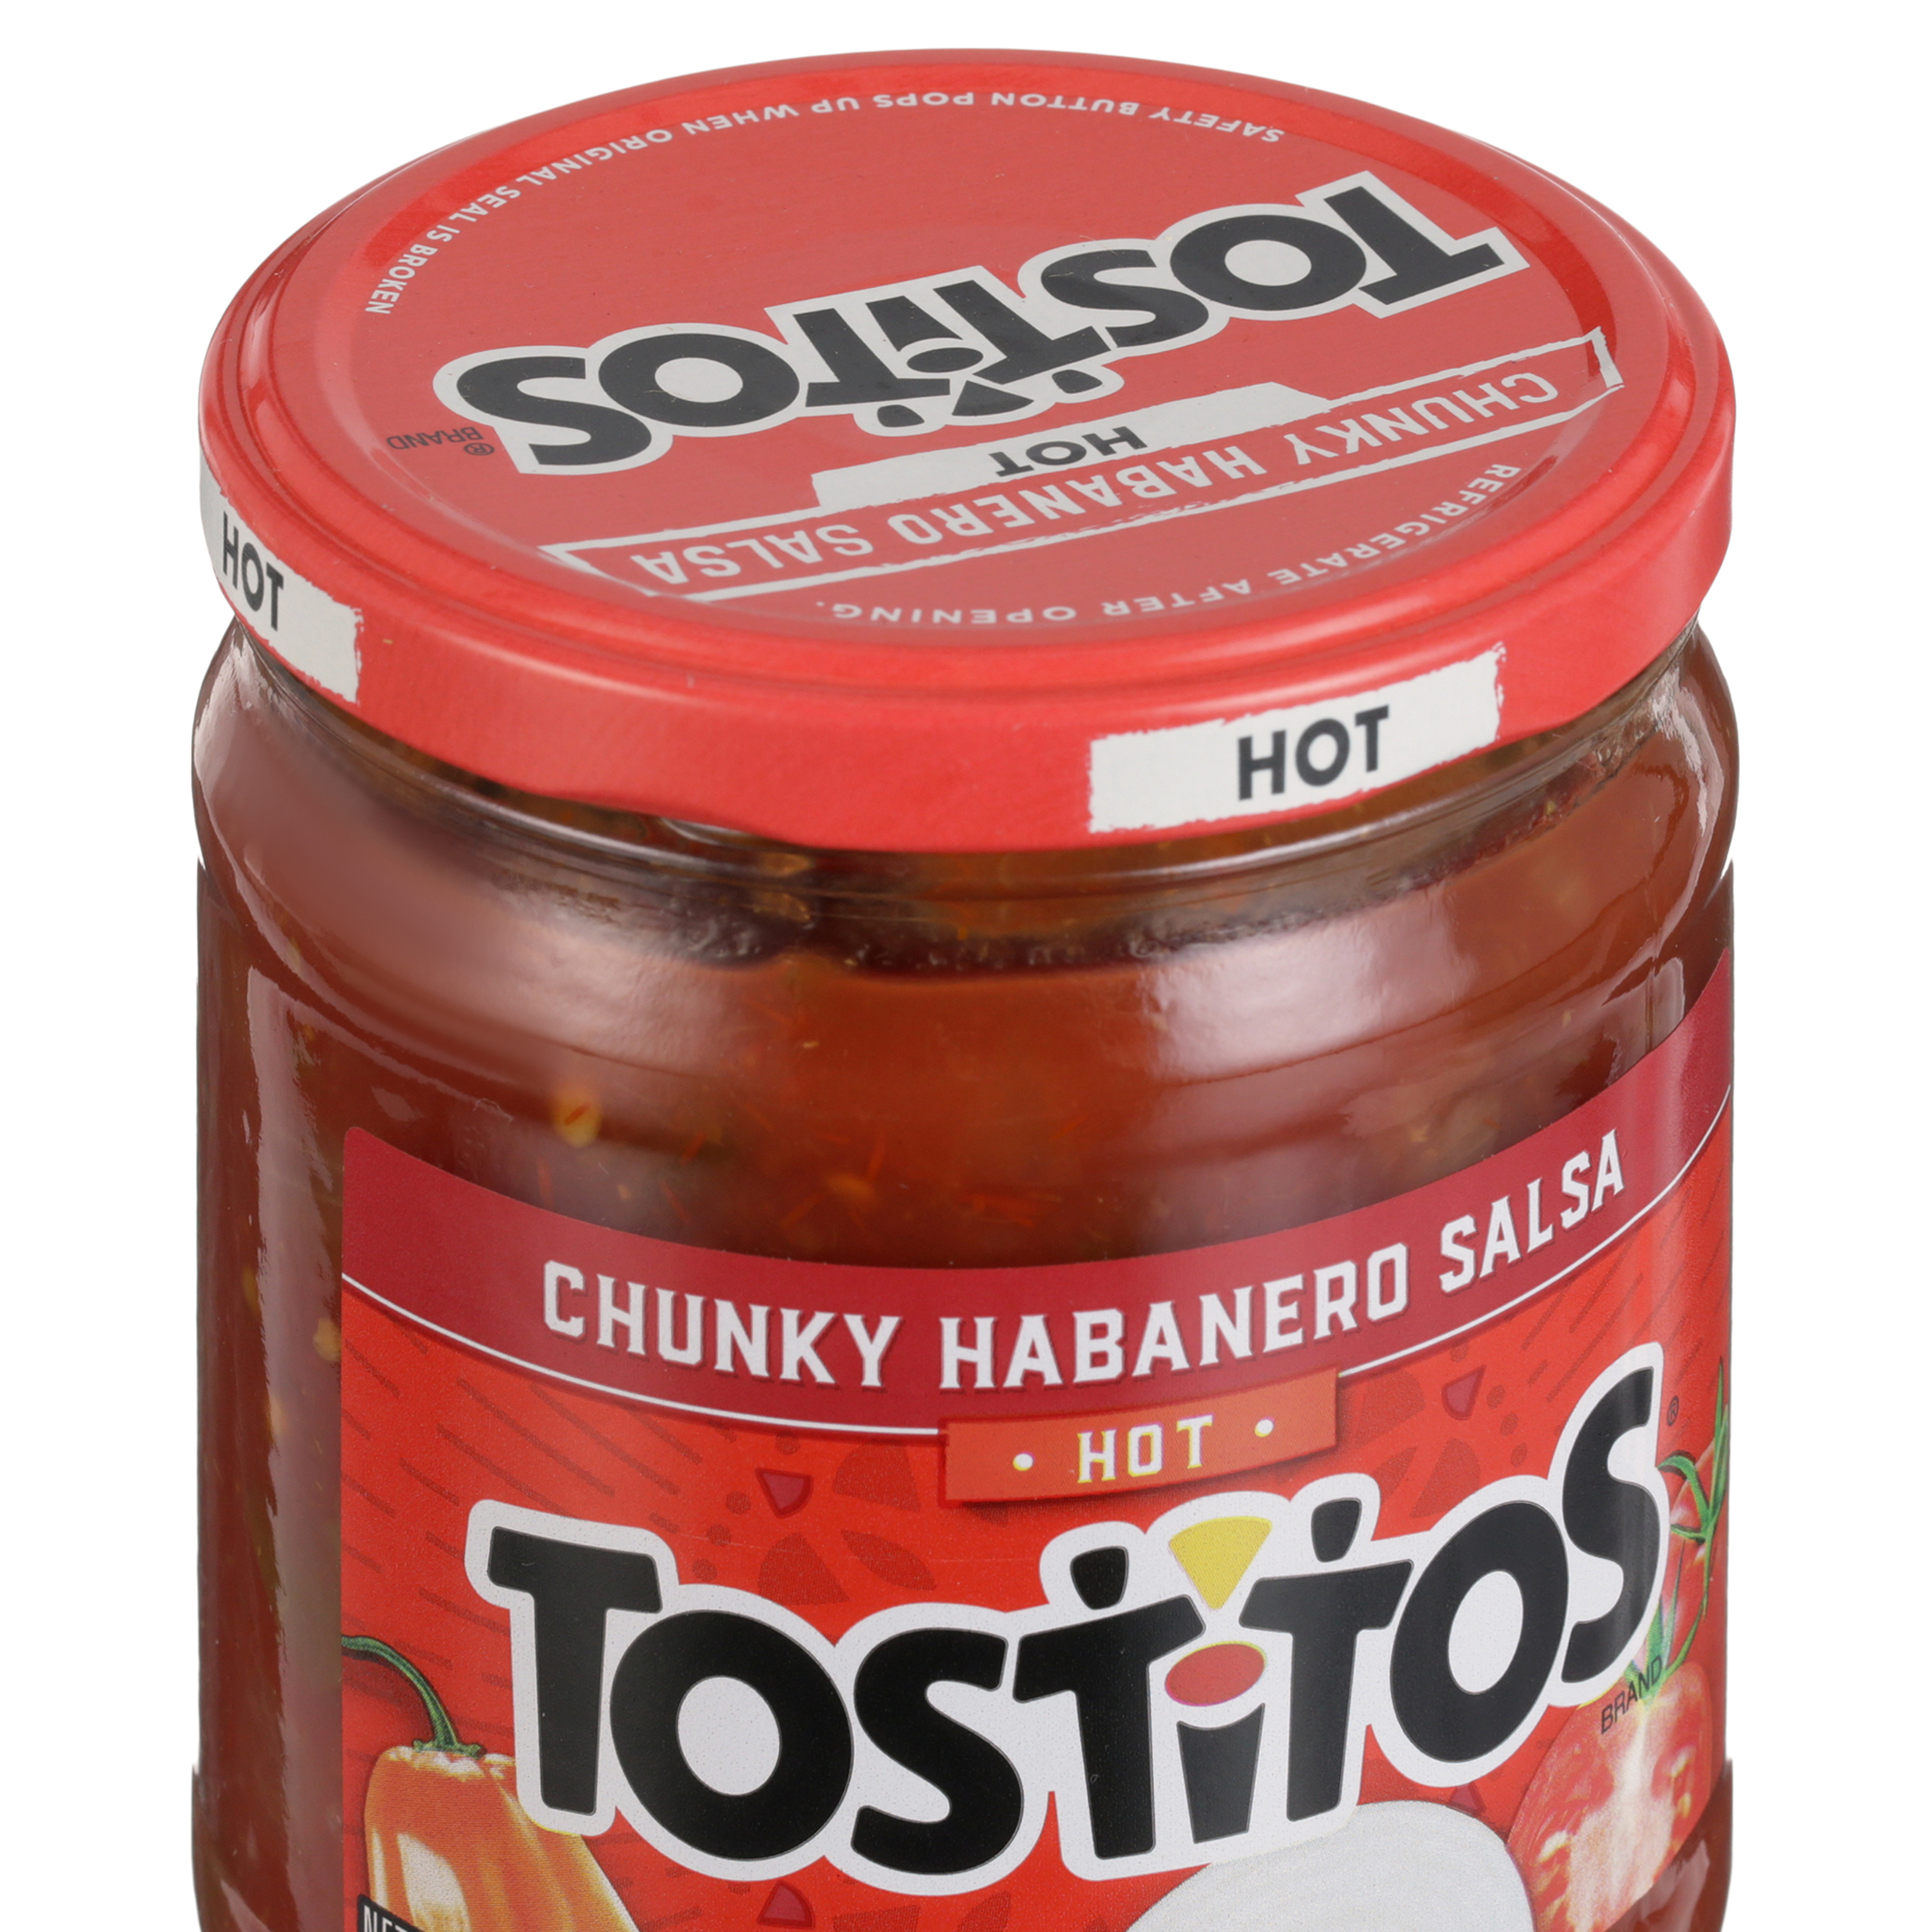 Tostitos Chunky Habanero Salsa, 15.5 oz, Single Jar pack - image 6 of 9